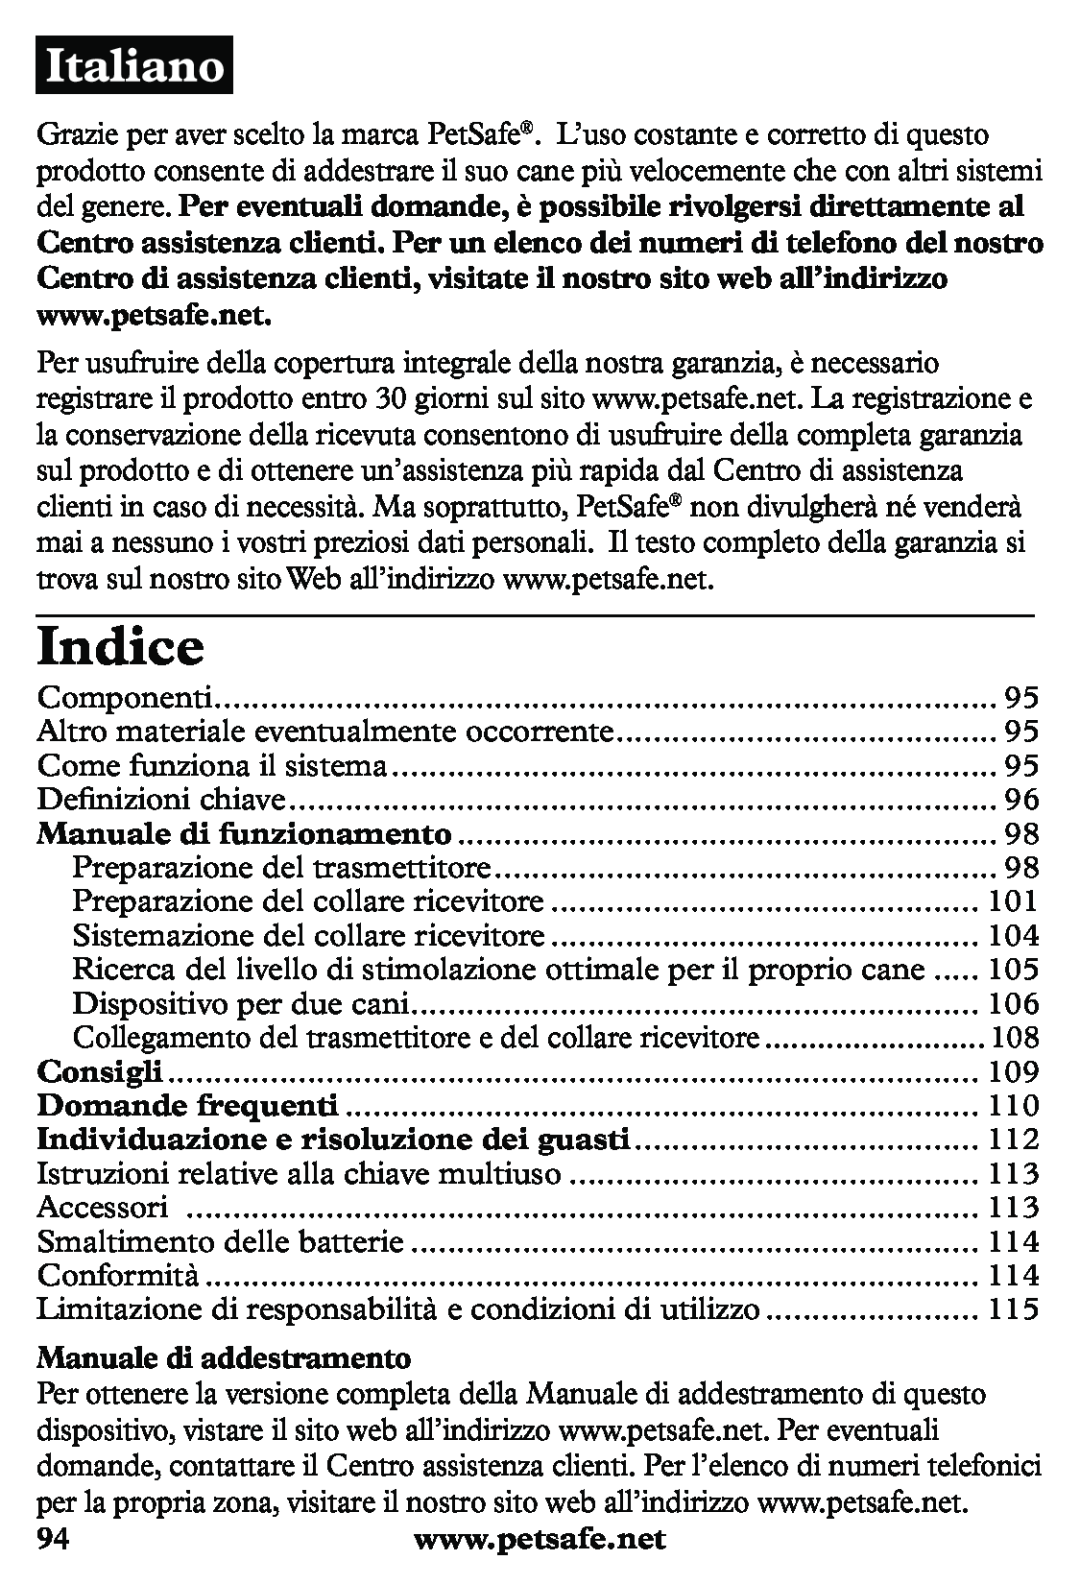 Petsafe PDT20-11939 manuel dutilisation Indice, Manuale di addestramento 